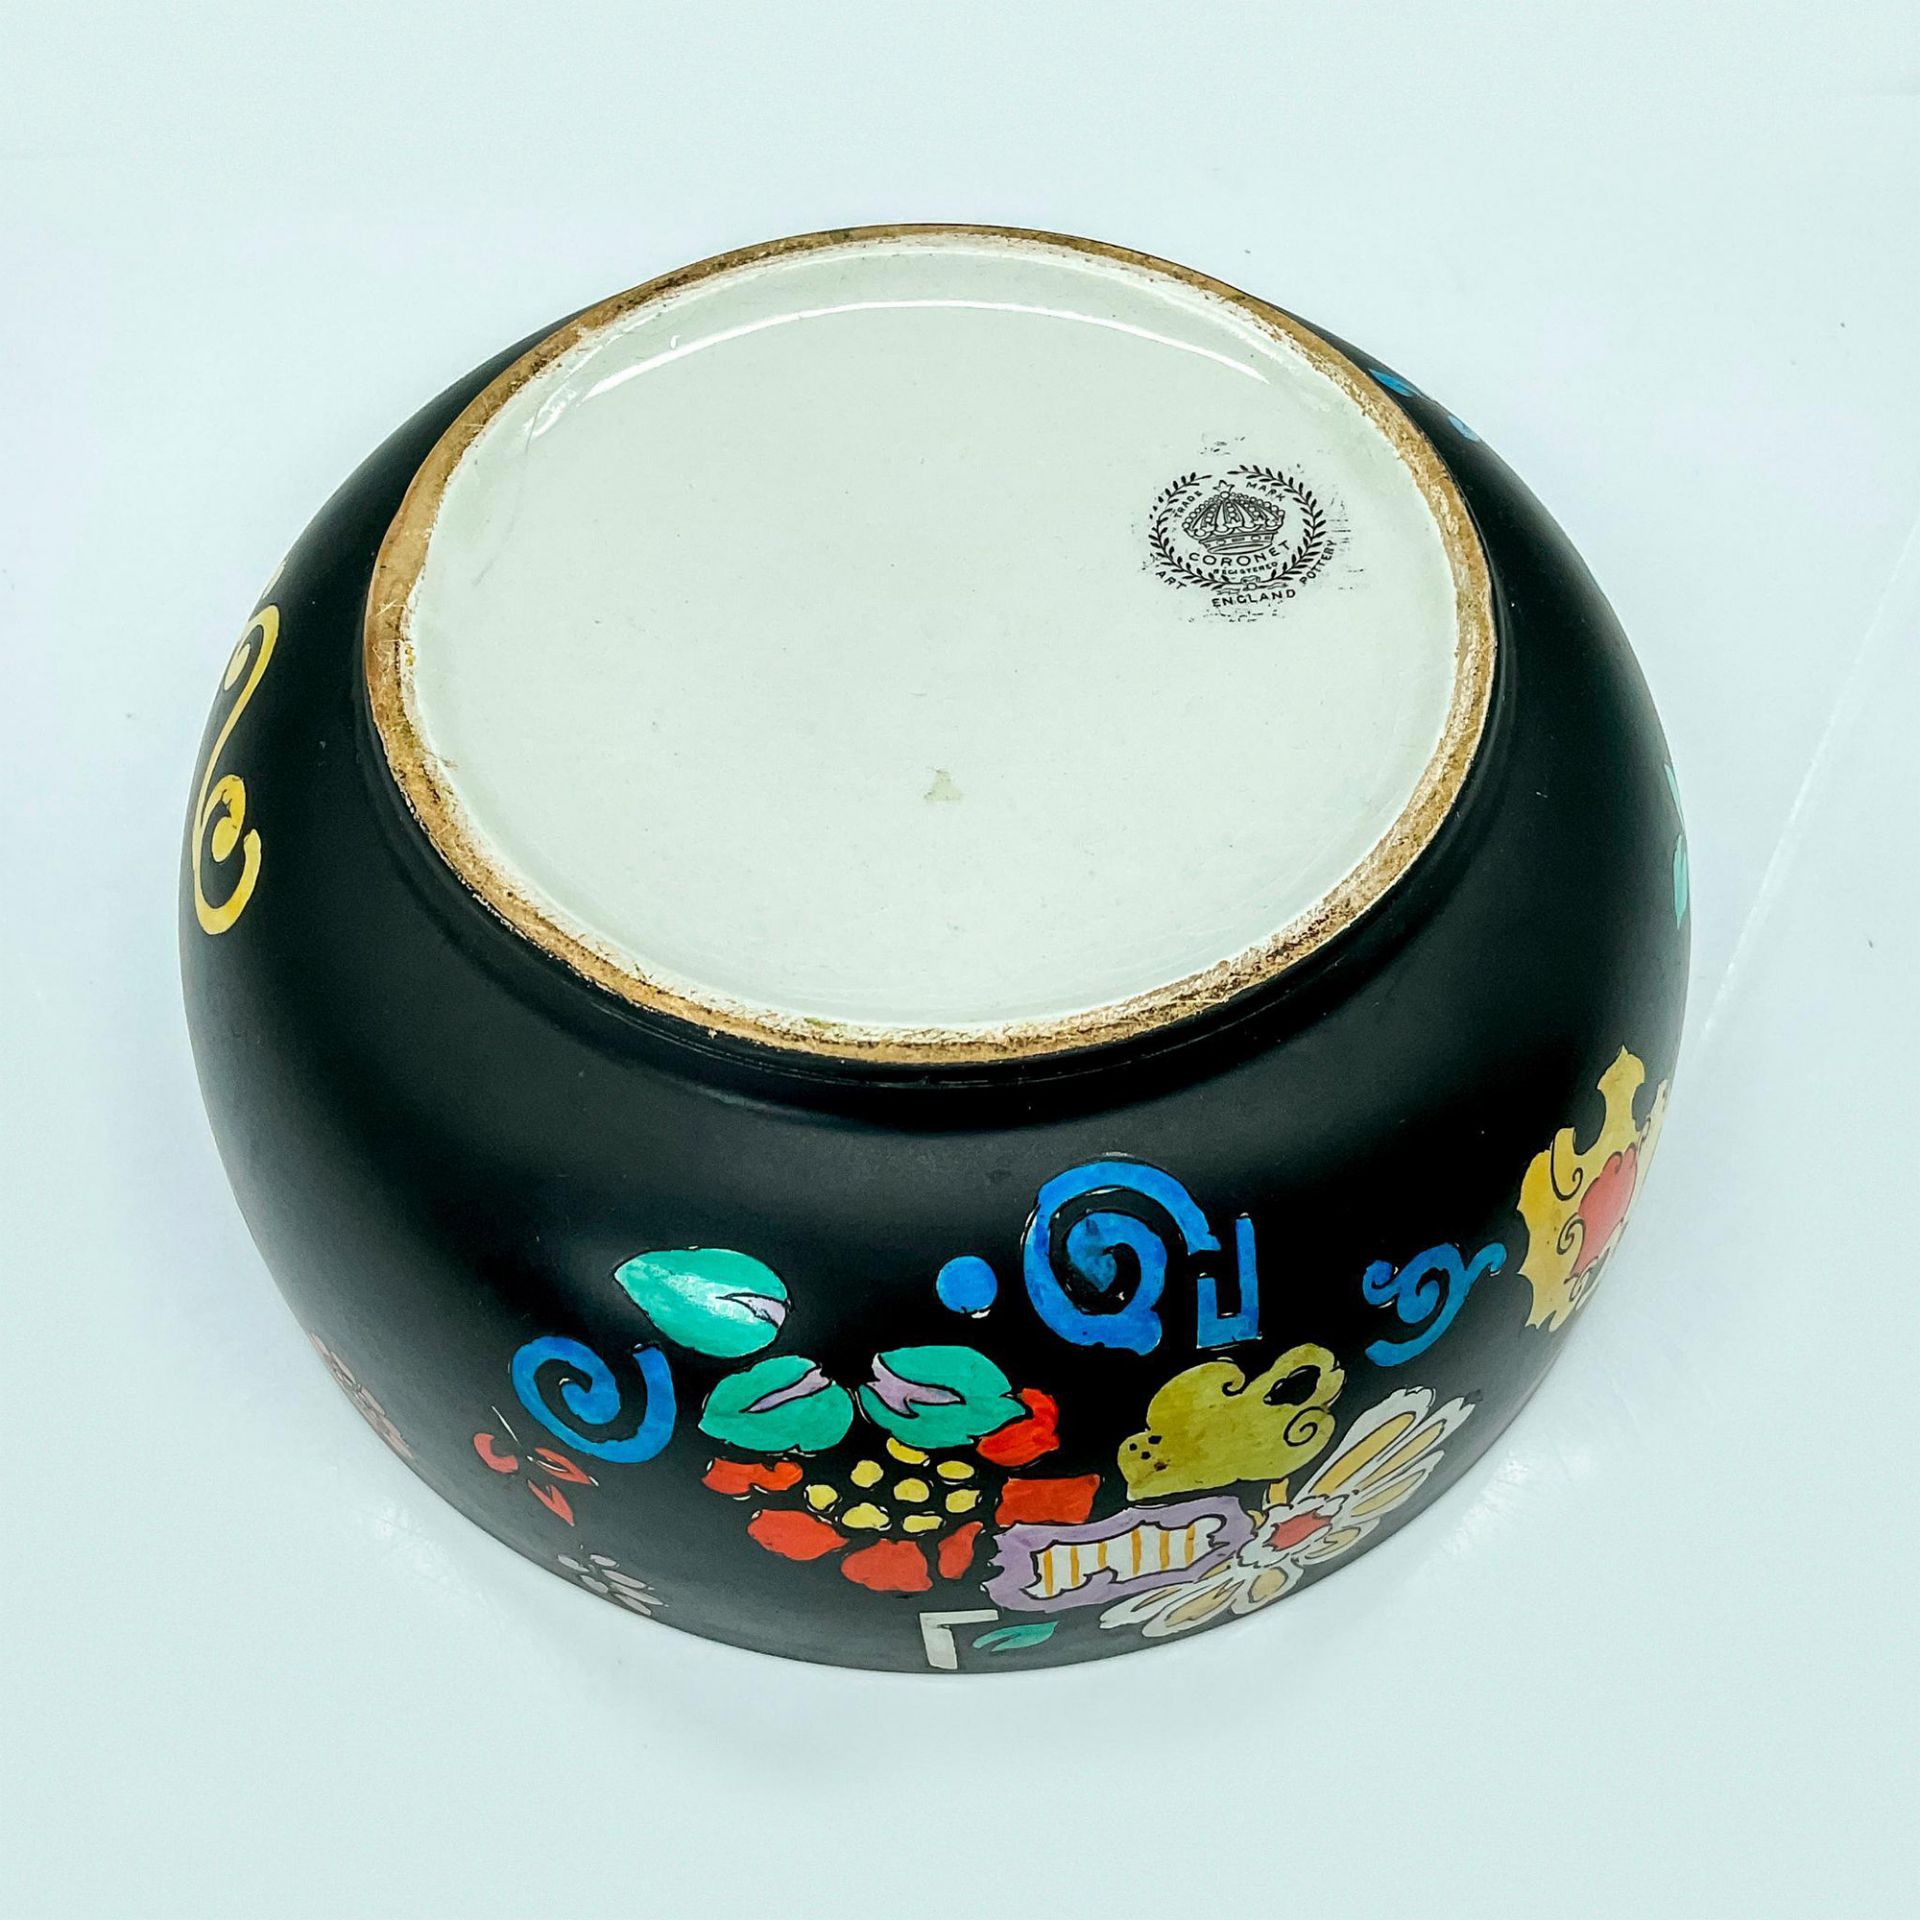 Coronet Art Pottery Bowl Black - Image 3 of 3